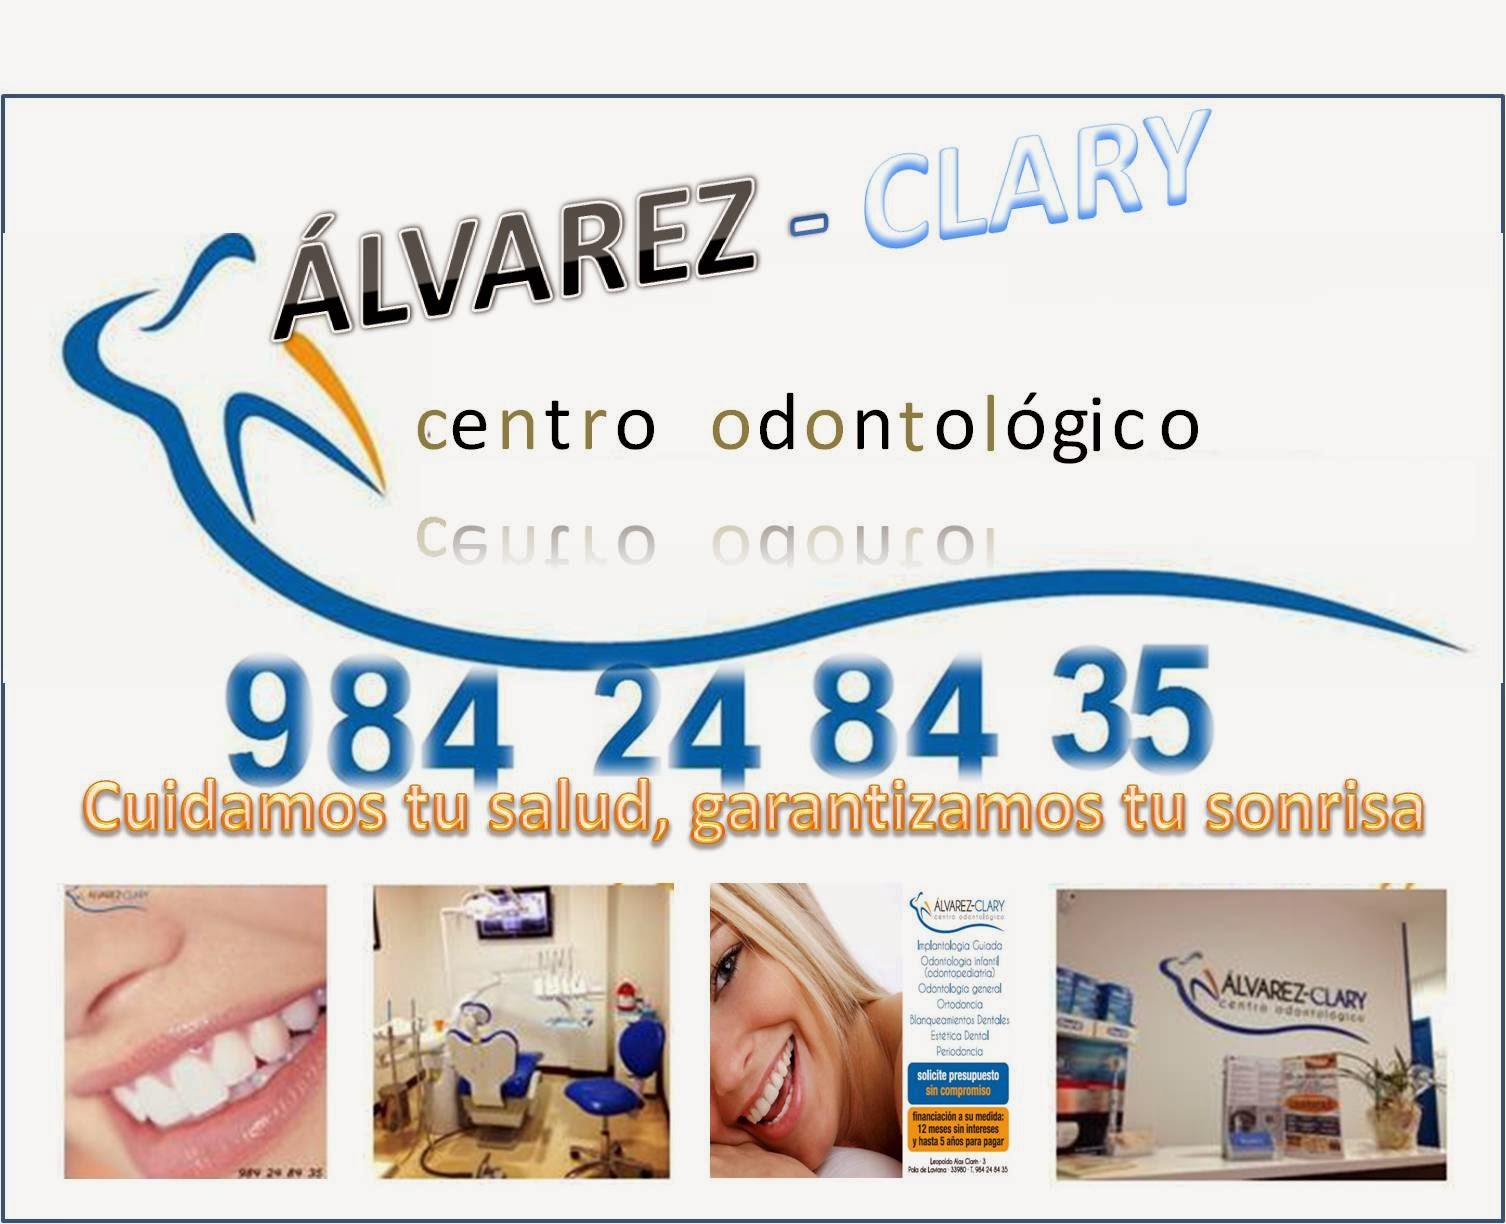 ÁLVAREZ - CLARY